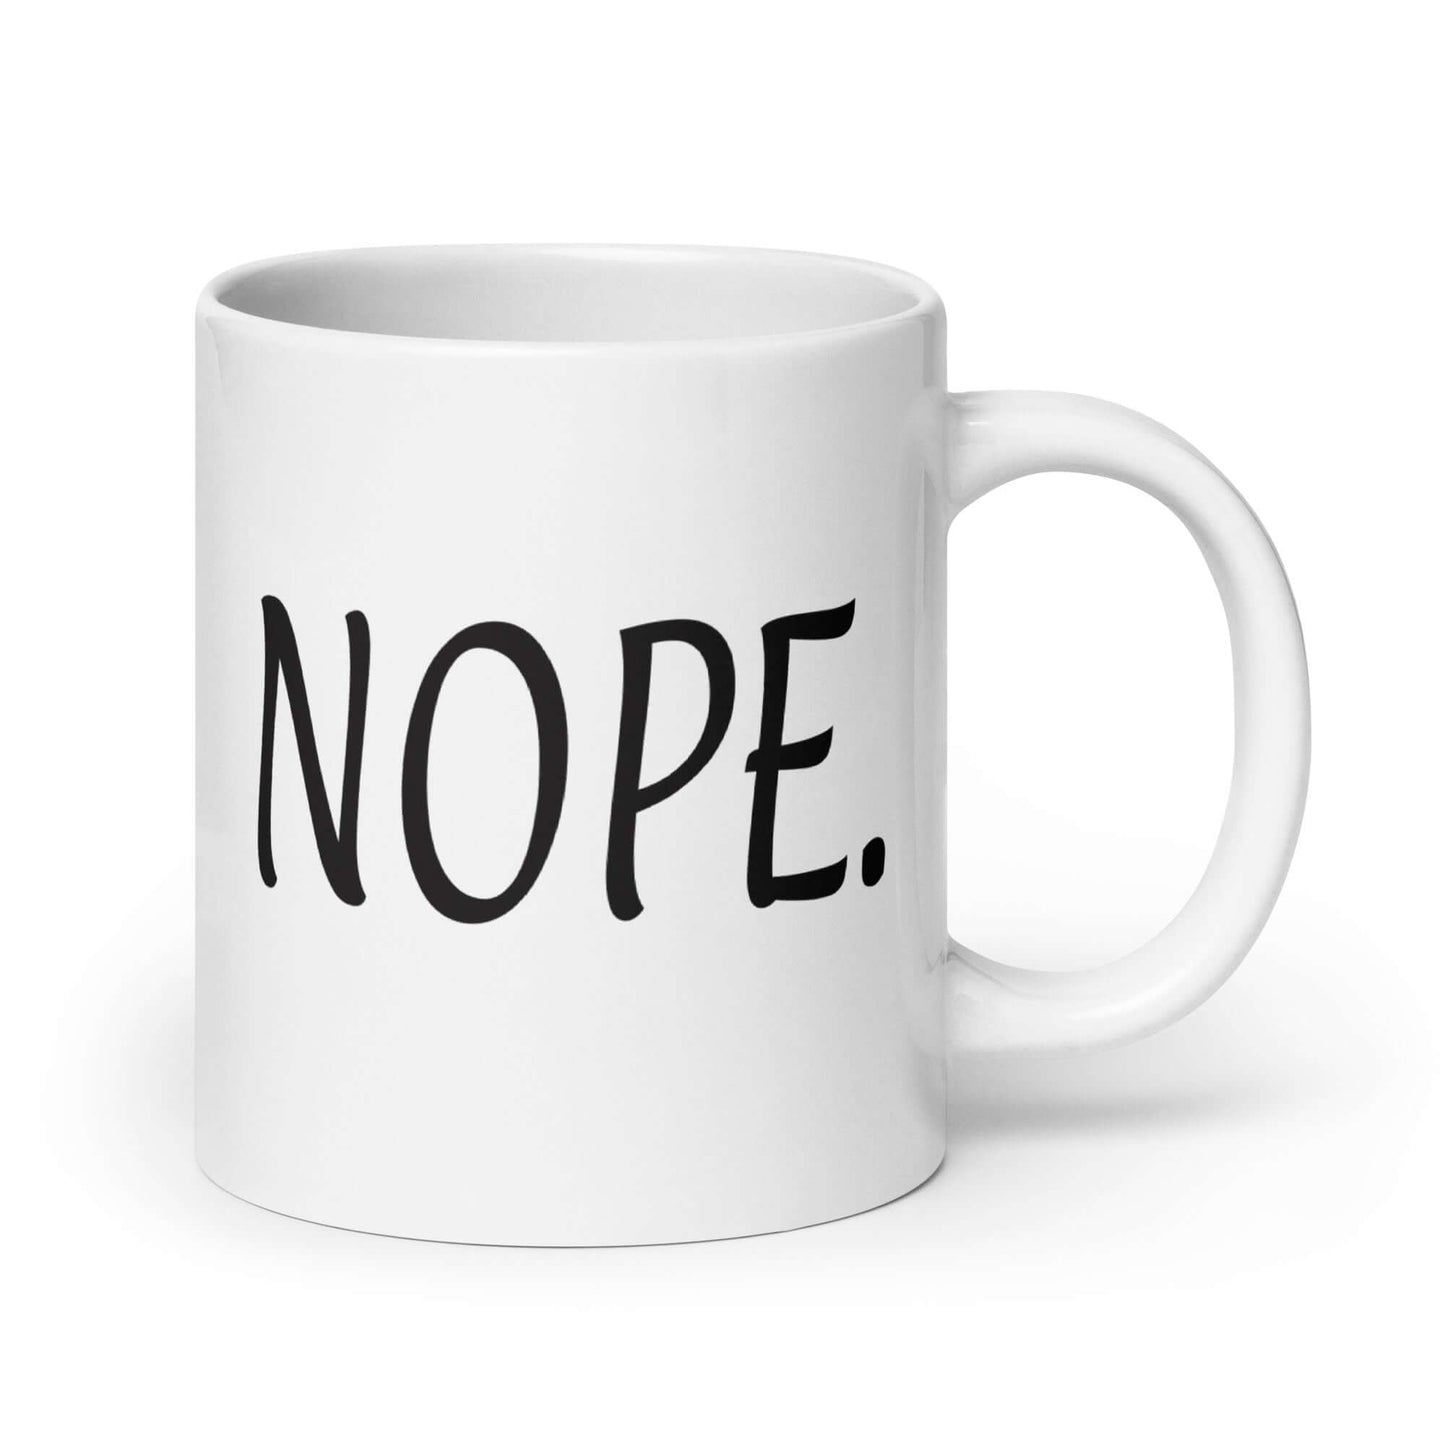 Nope coffee mug